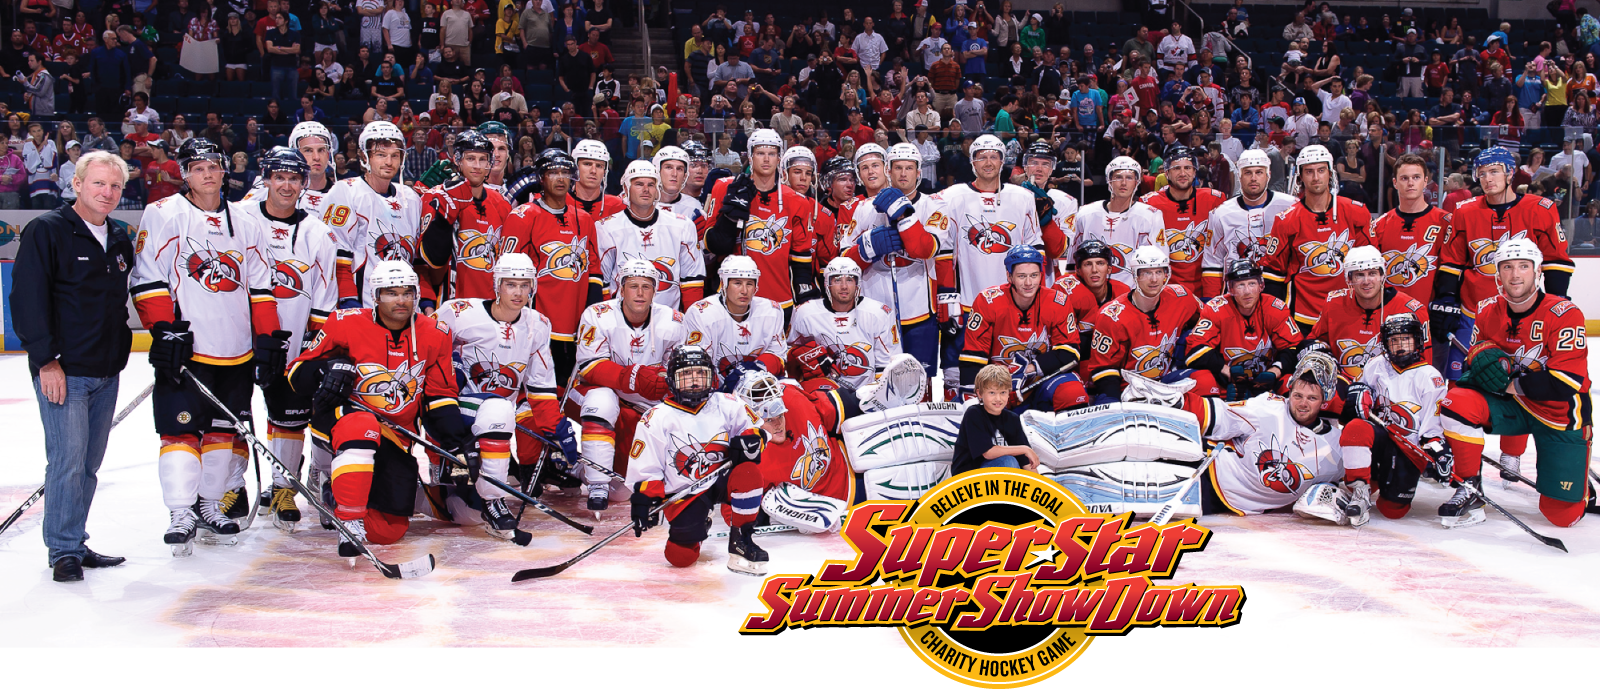 Superstar Summer Showdown Charity Hockey Game Team Photo